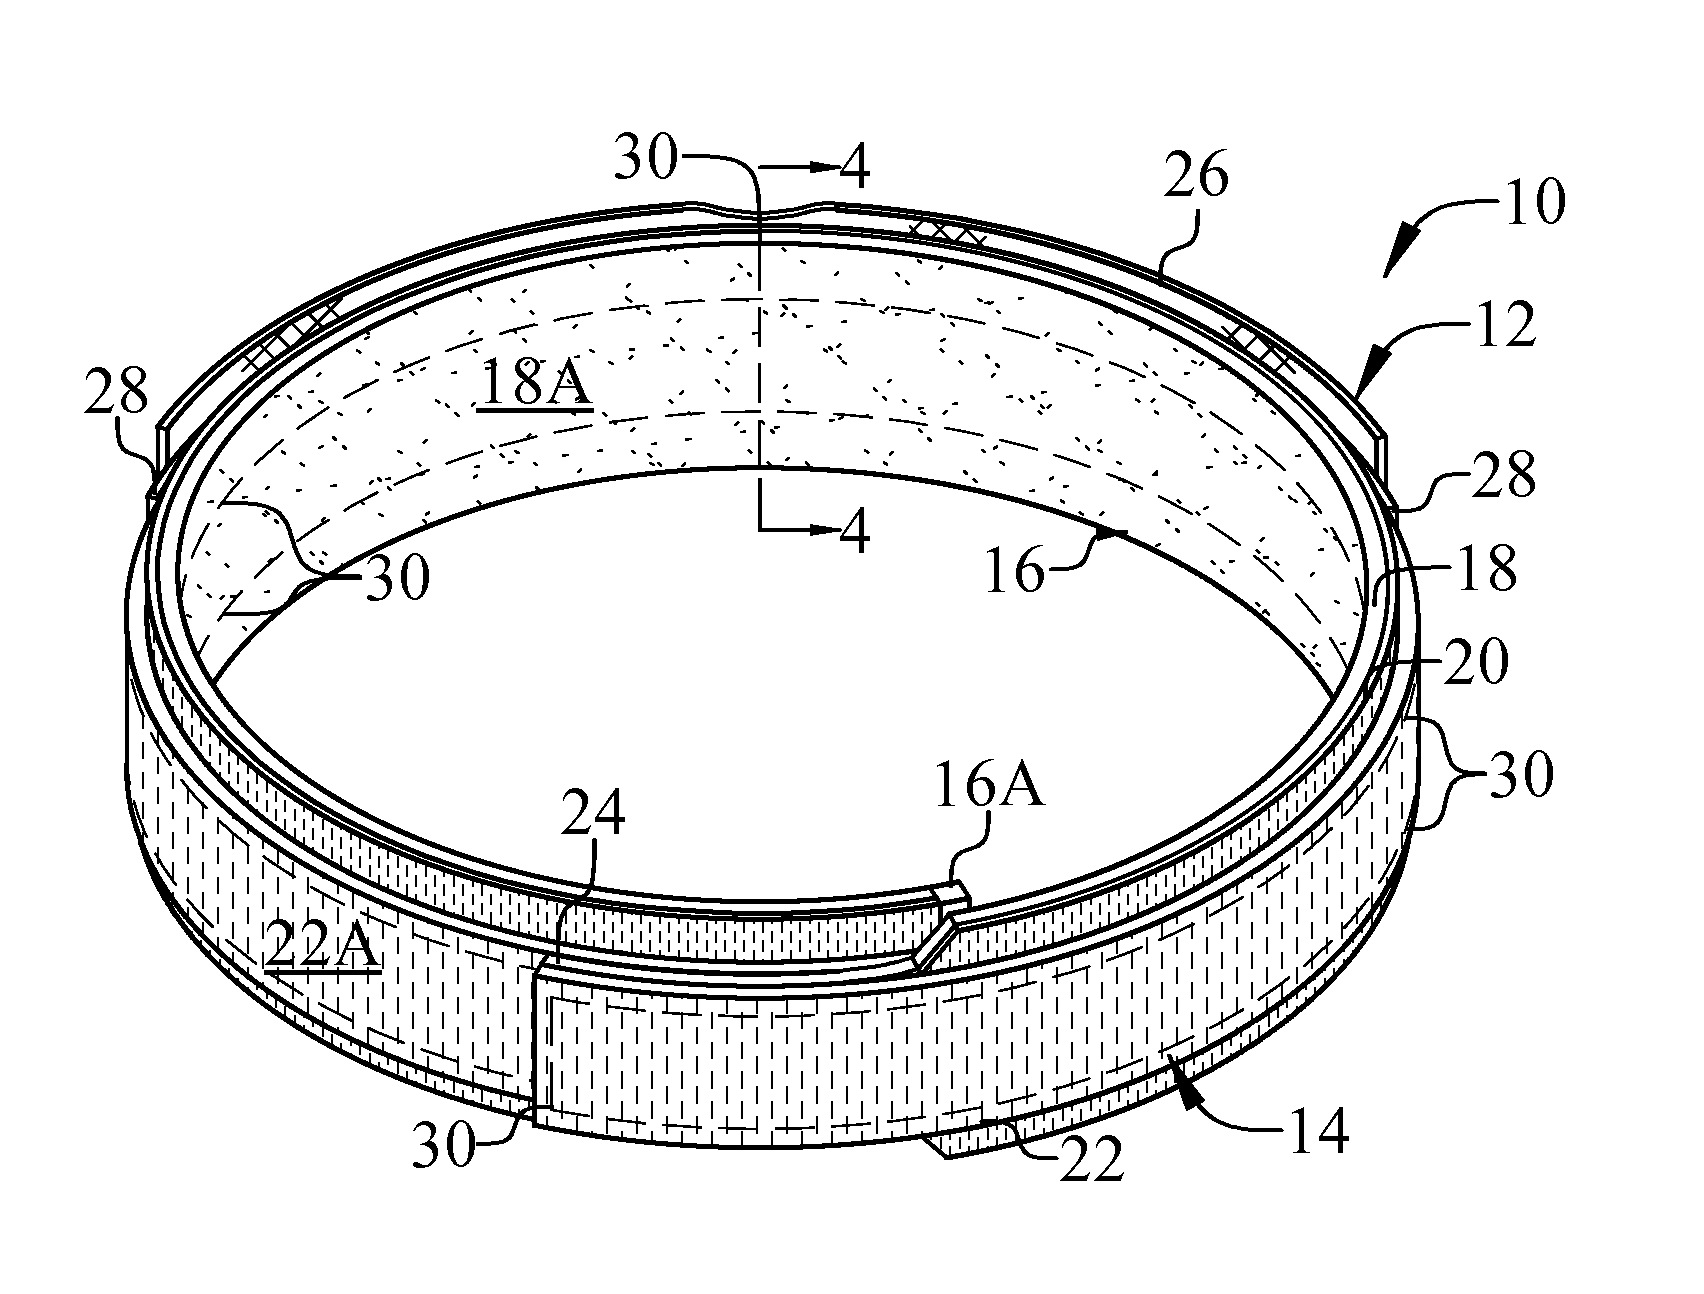 Sacroiliac belt and composite structure